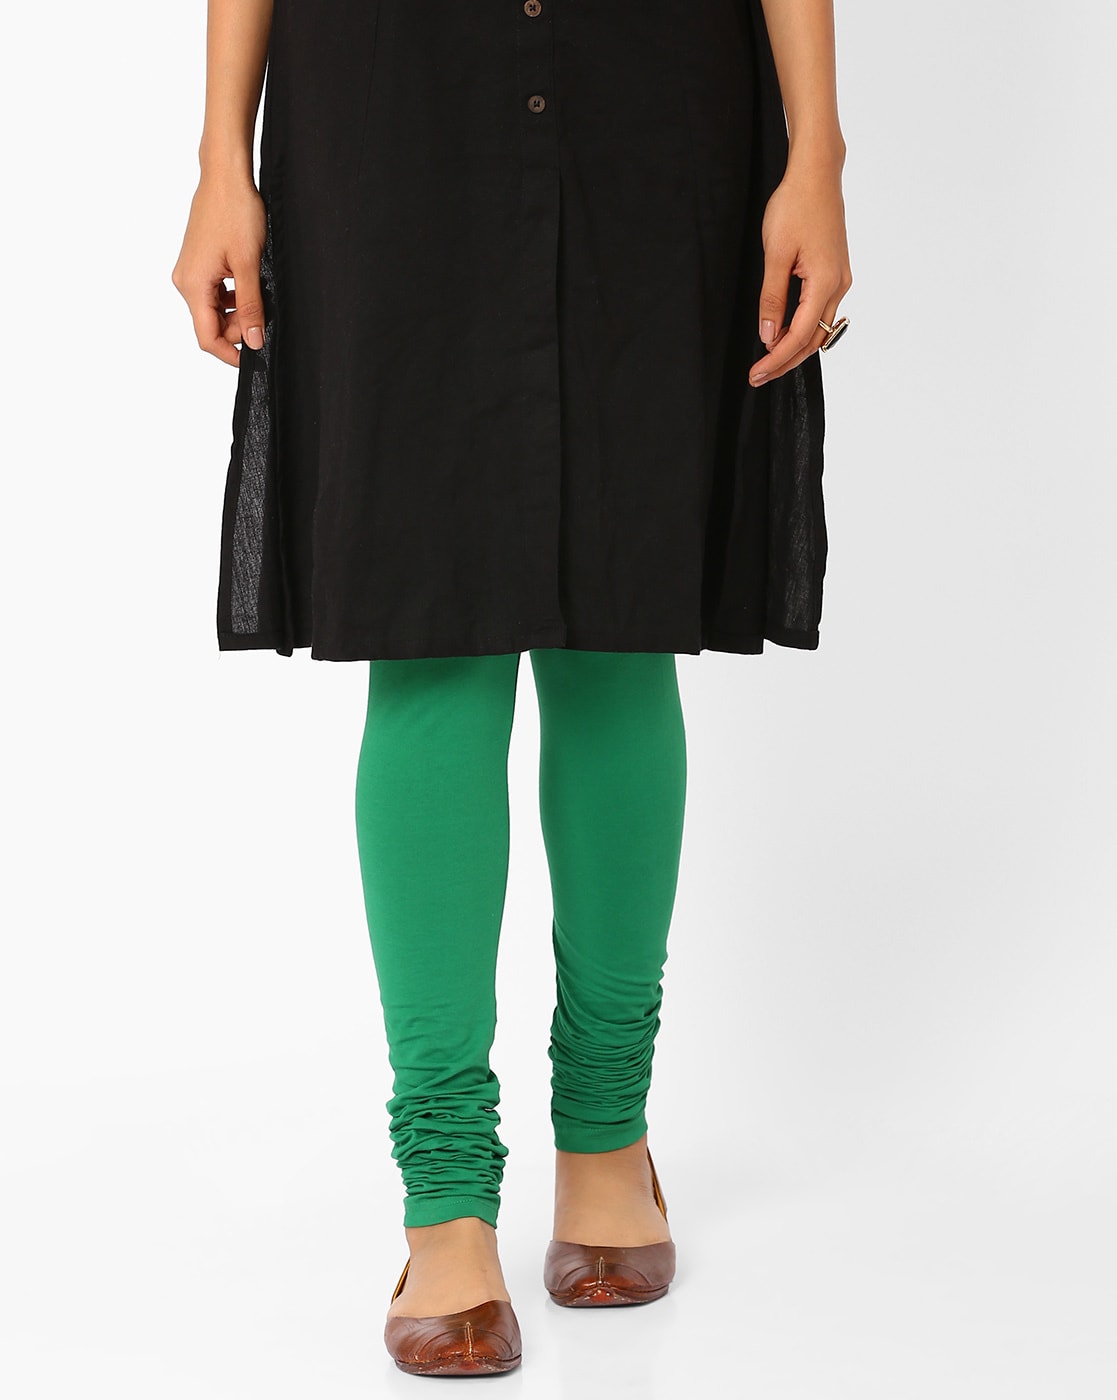 Green leggings with figures RUMENA | Women's trousers long | bg-look.com-mncb.edu.vn